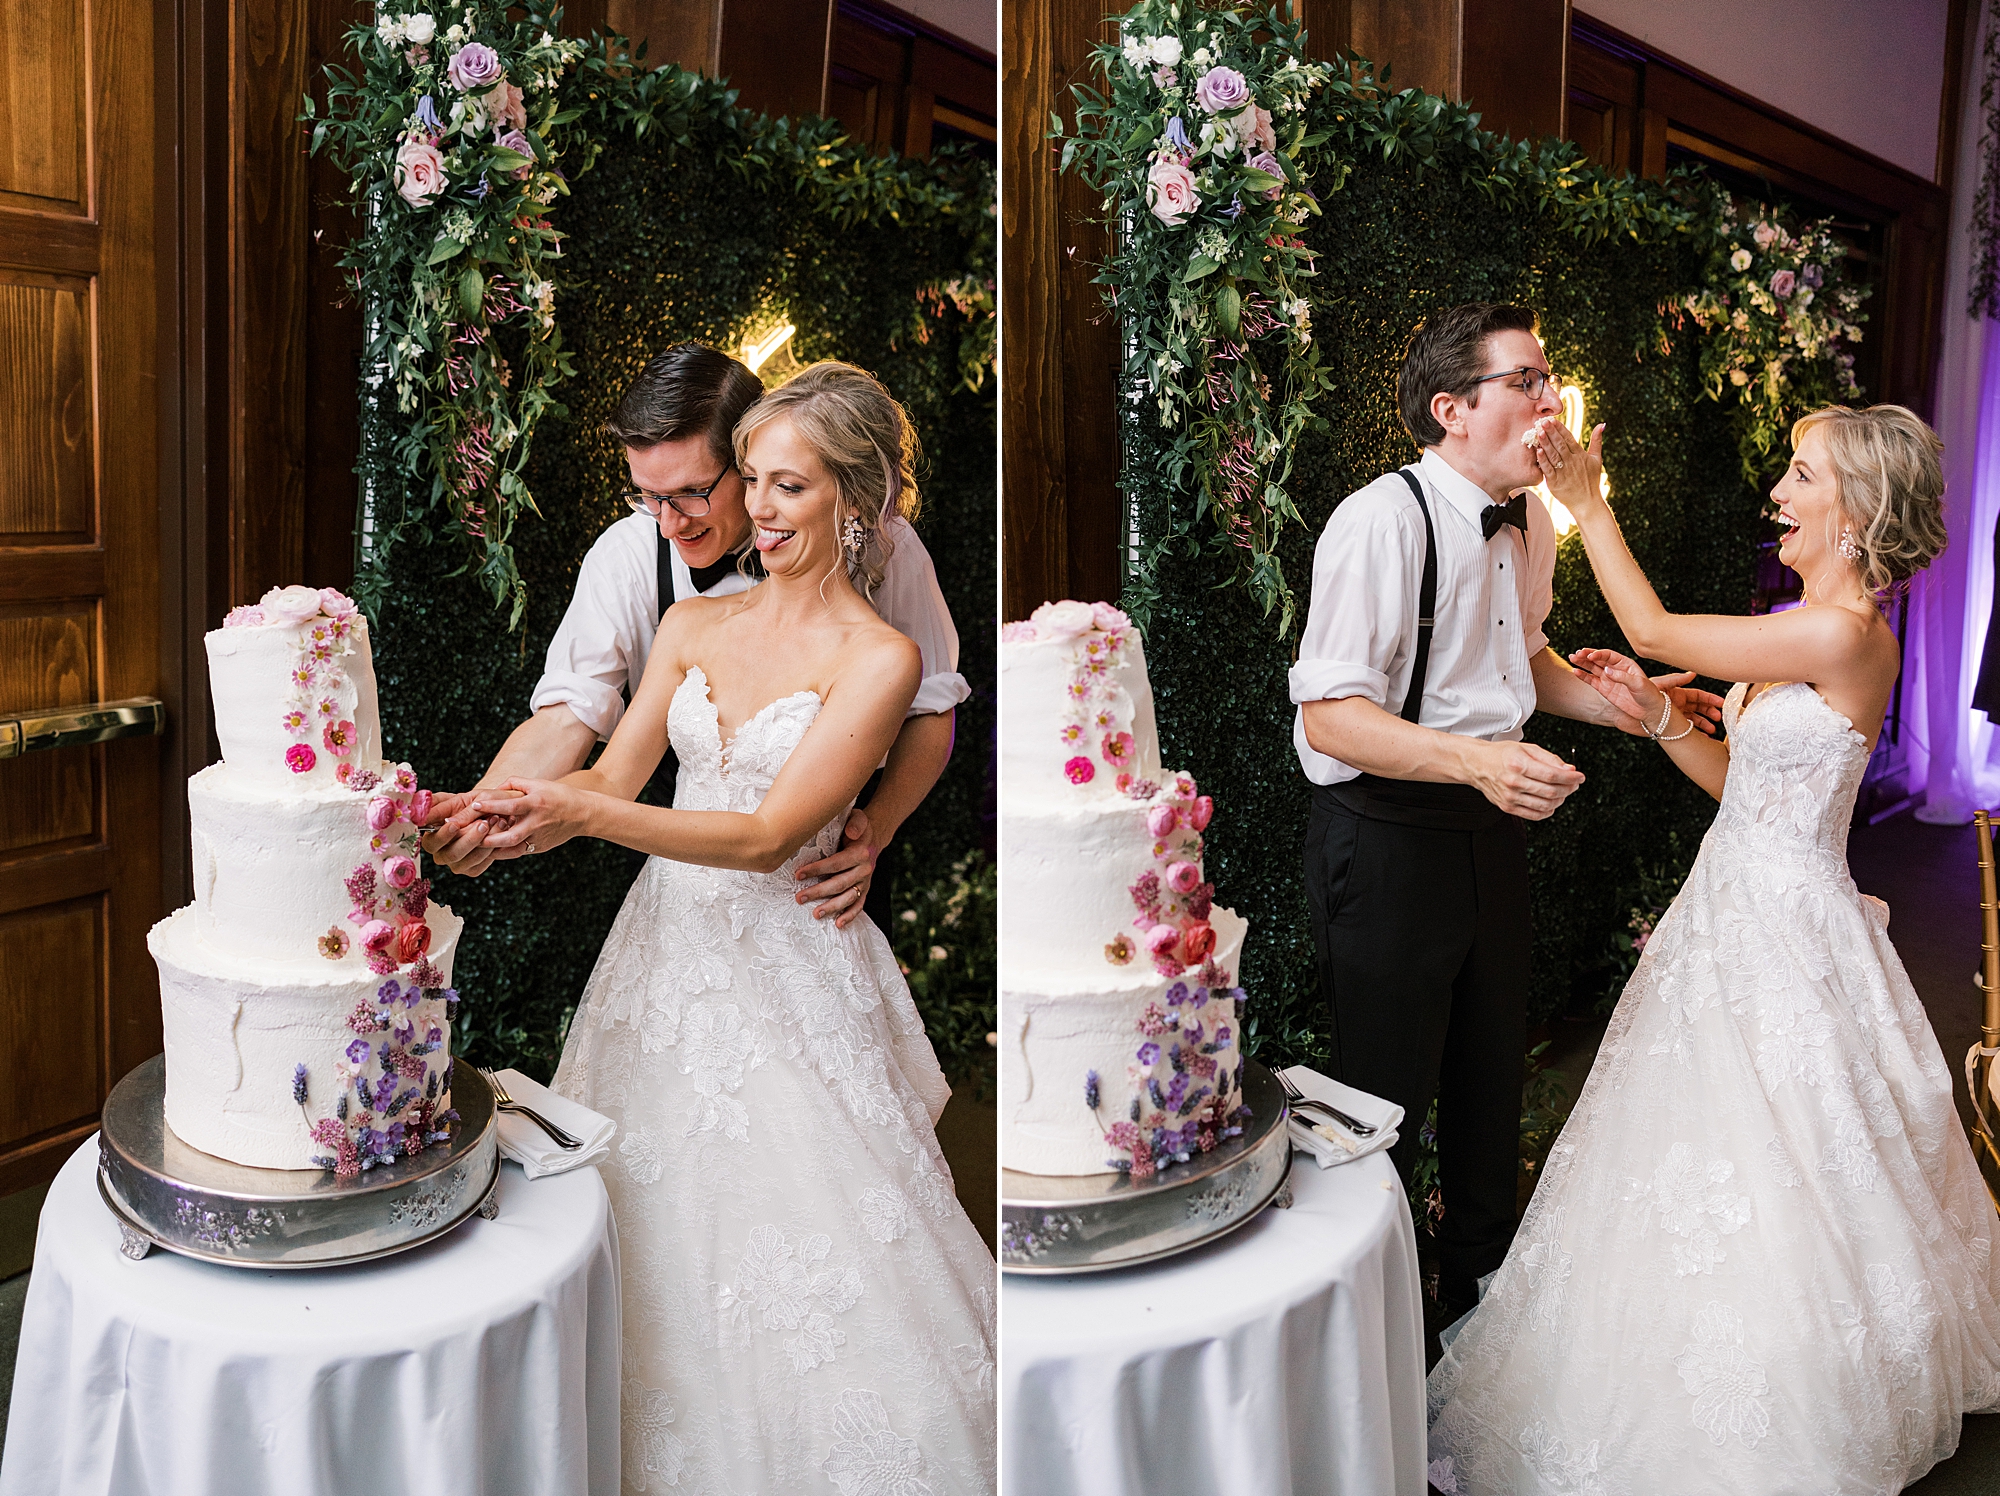 newlyweds cut tiered wedding cake during Skytop PA wedding reception